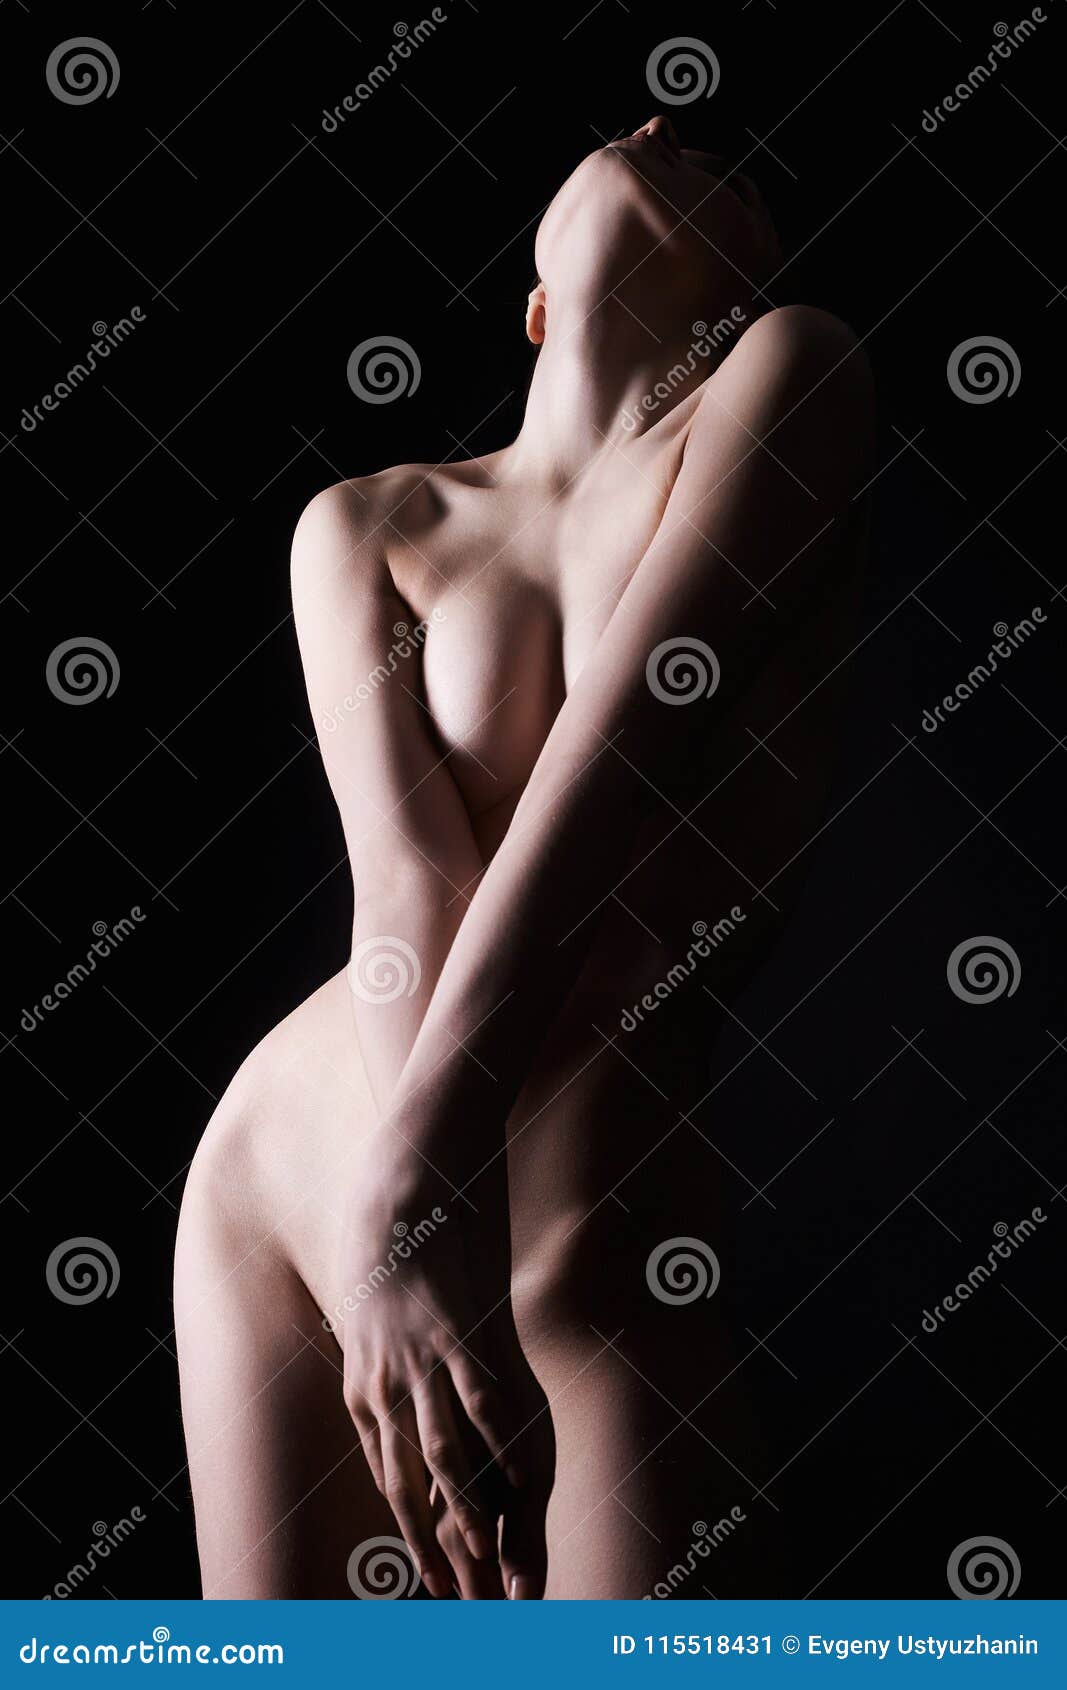 carlos hamlin add the perfect woman nude photo